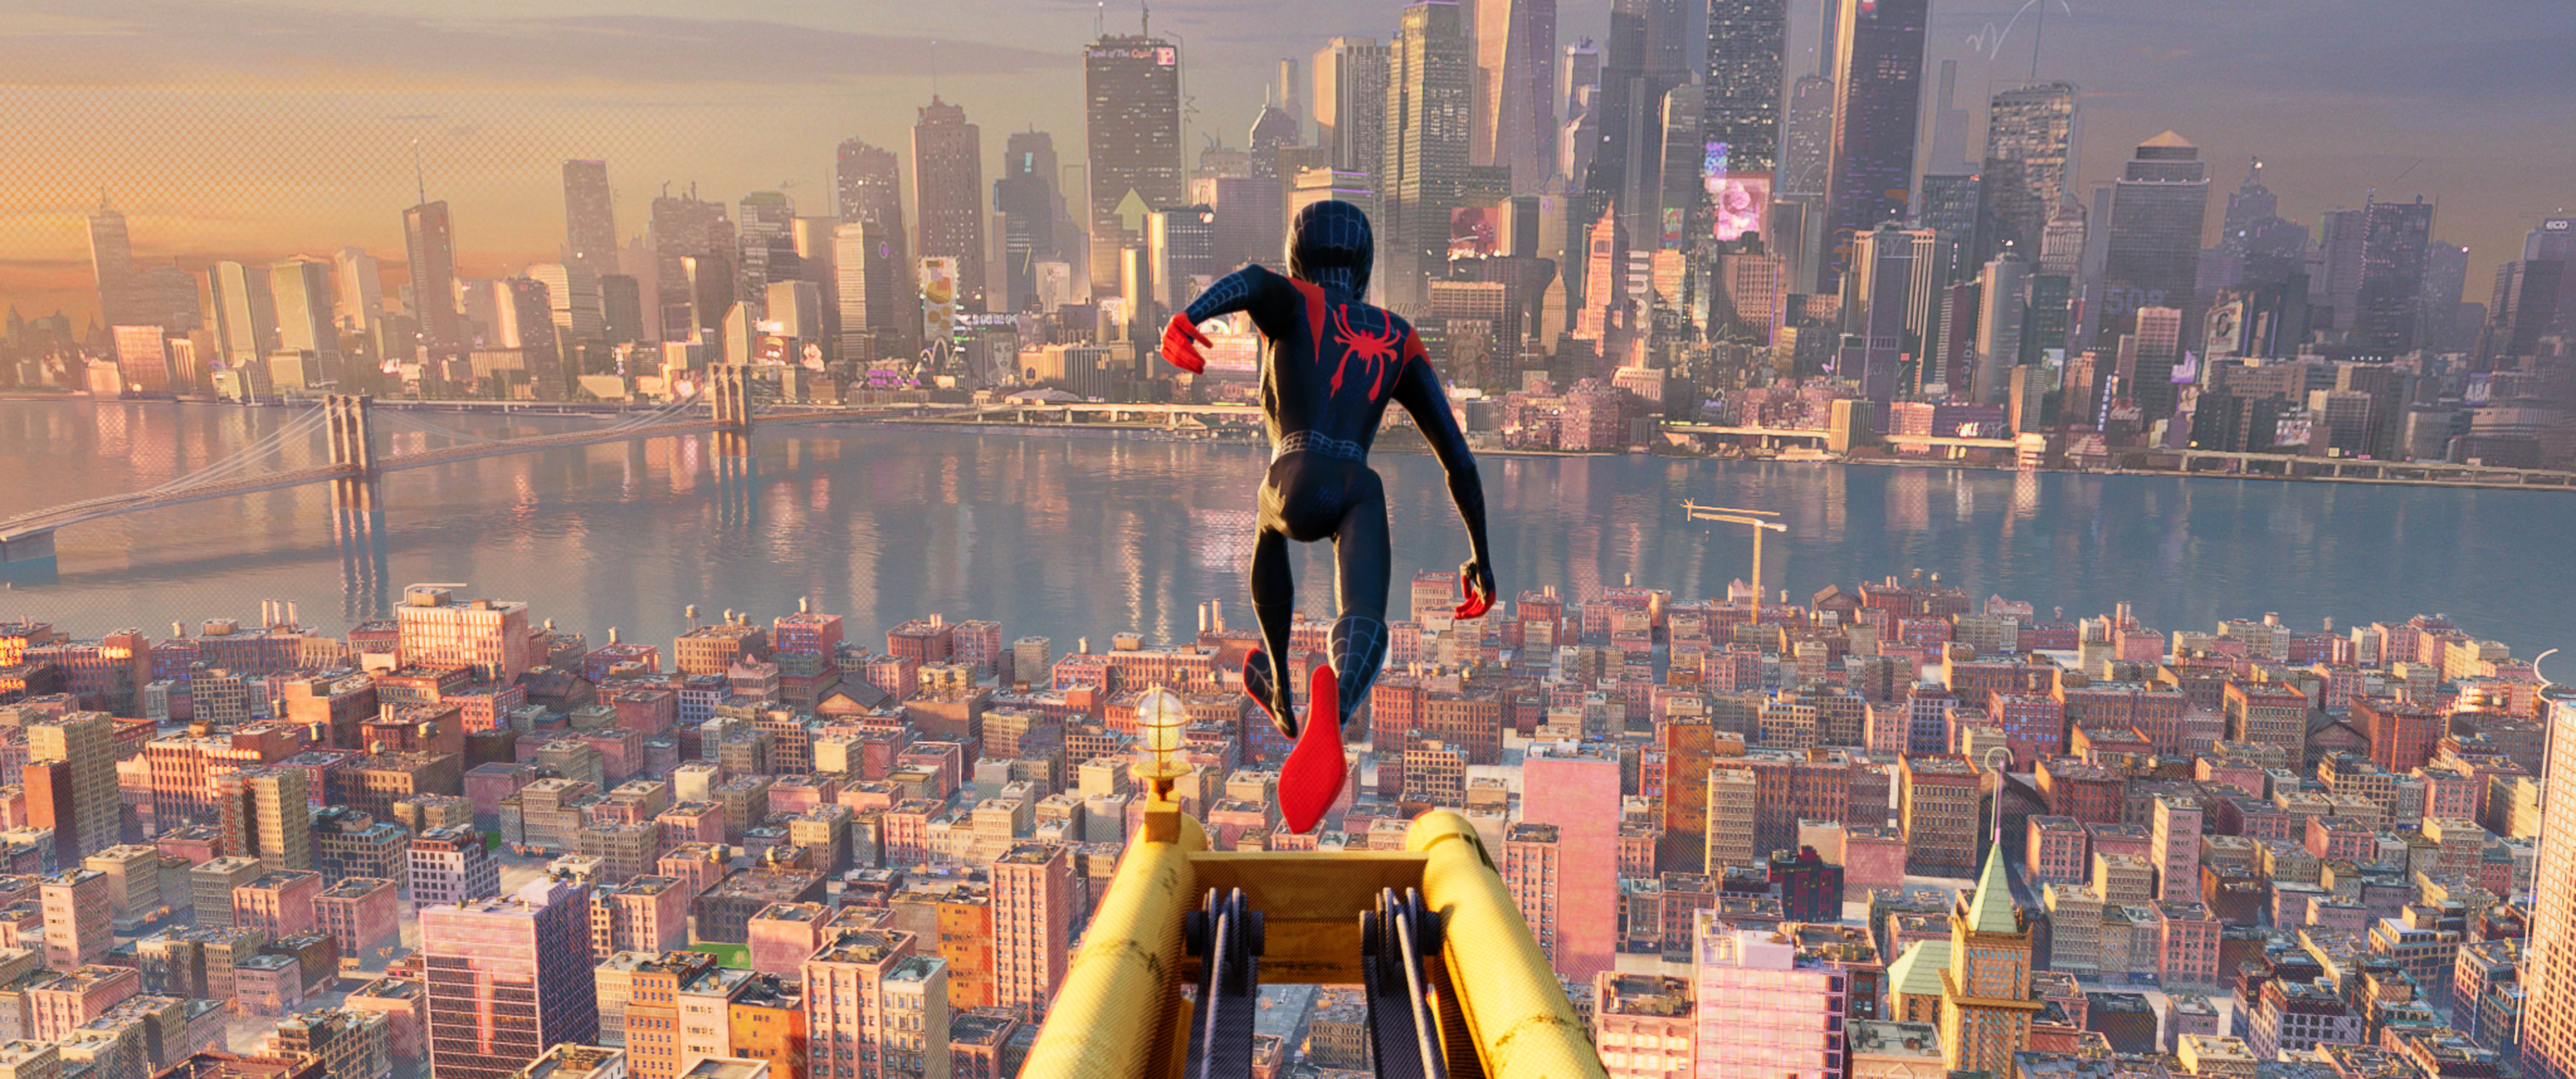 Spider-Man™: Into the Spider-Verse Gallery 7